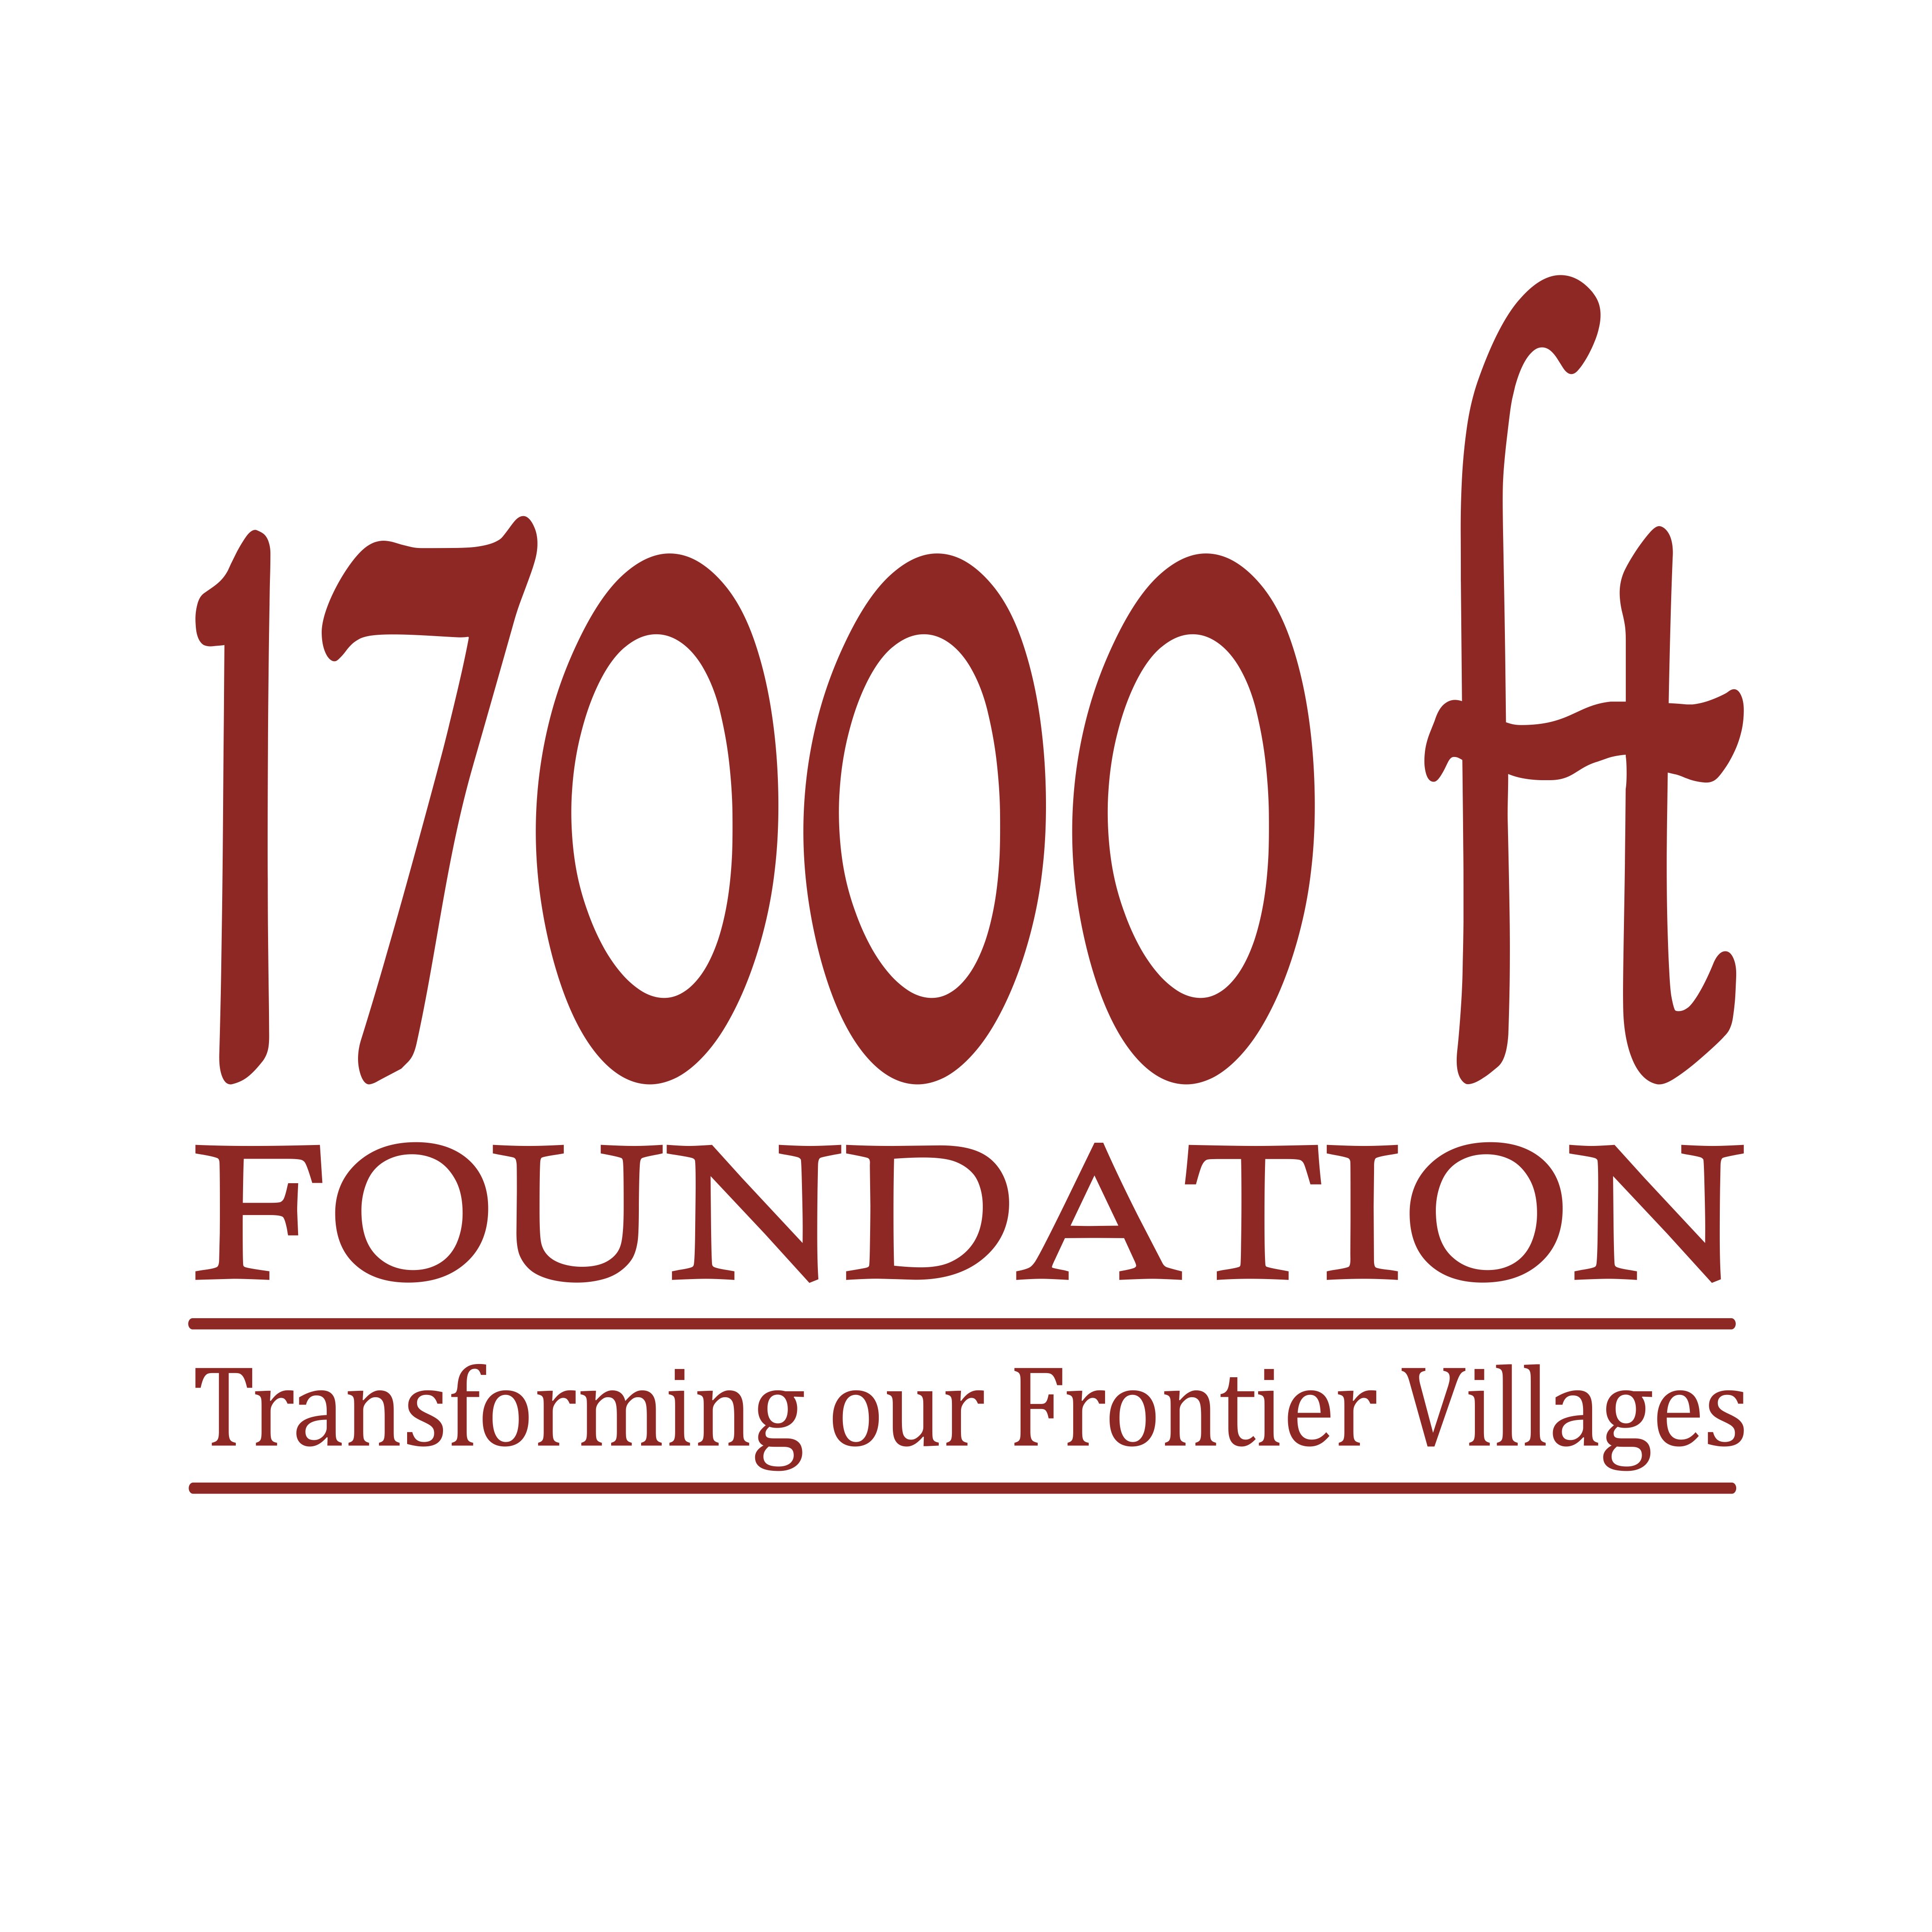 17000 ft Foundation  